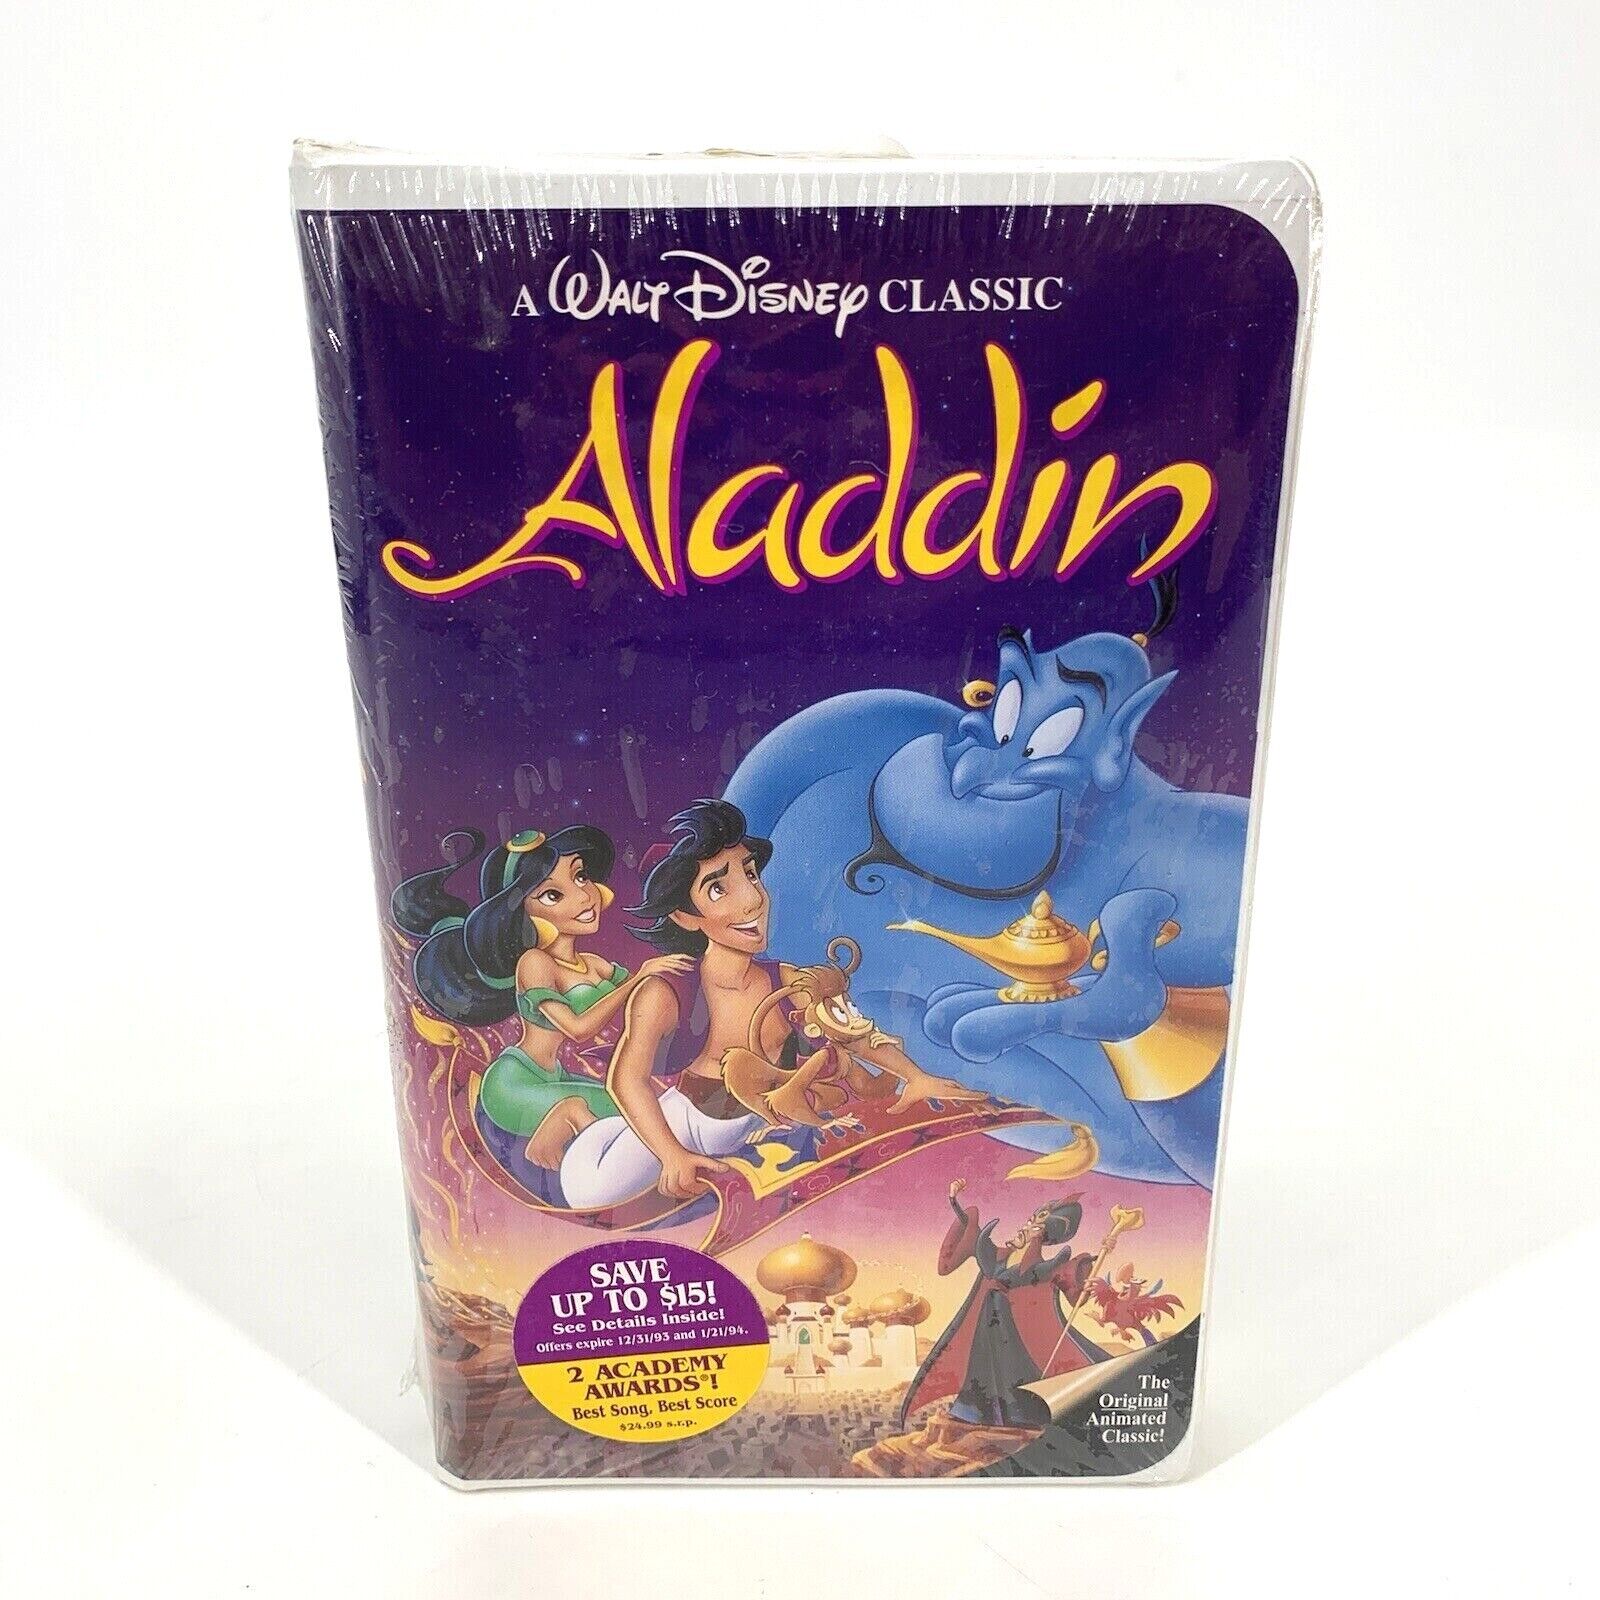 RARE Walt Disney’s Aladdin Black Diamond Classic VHS #1662 Sealed NEW